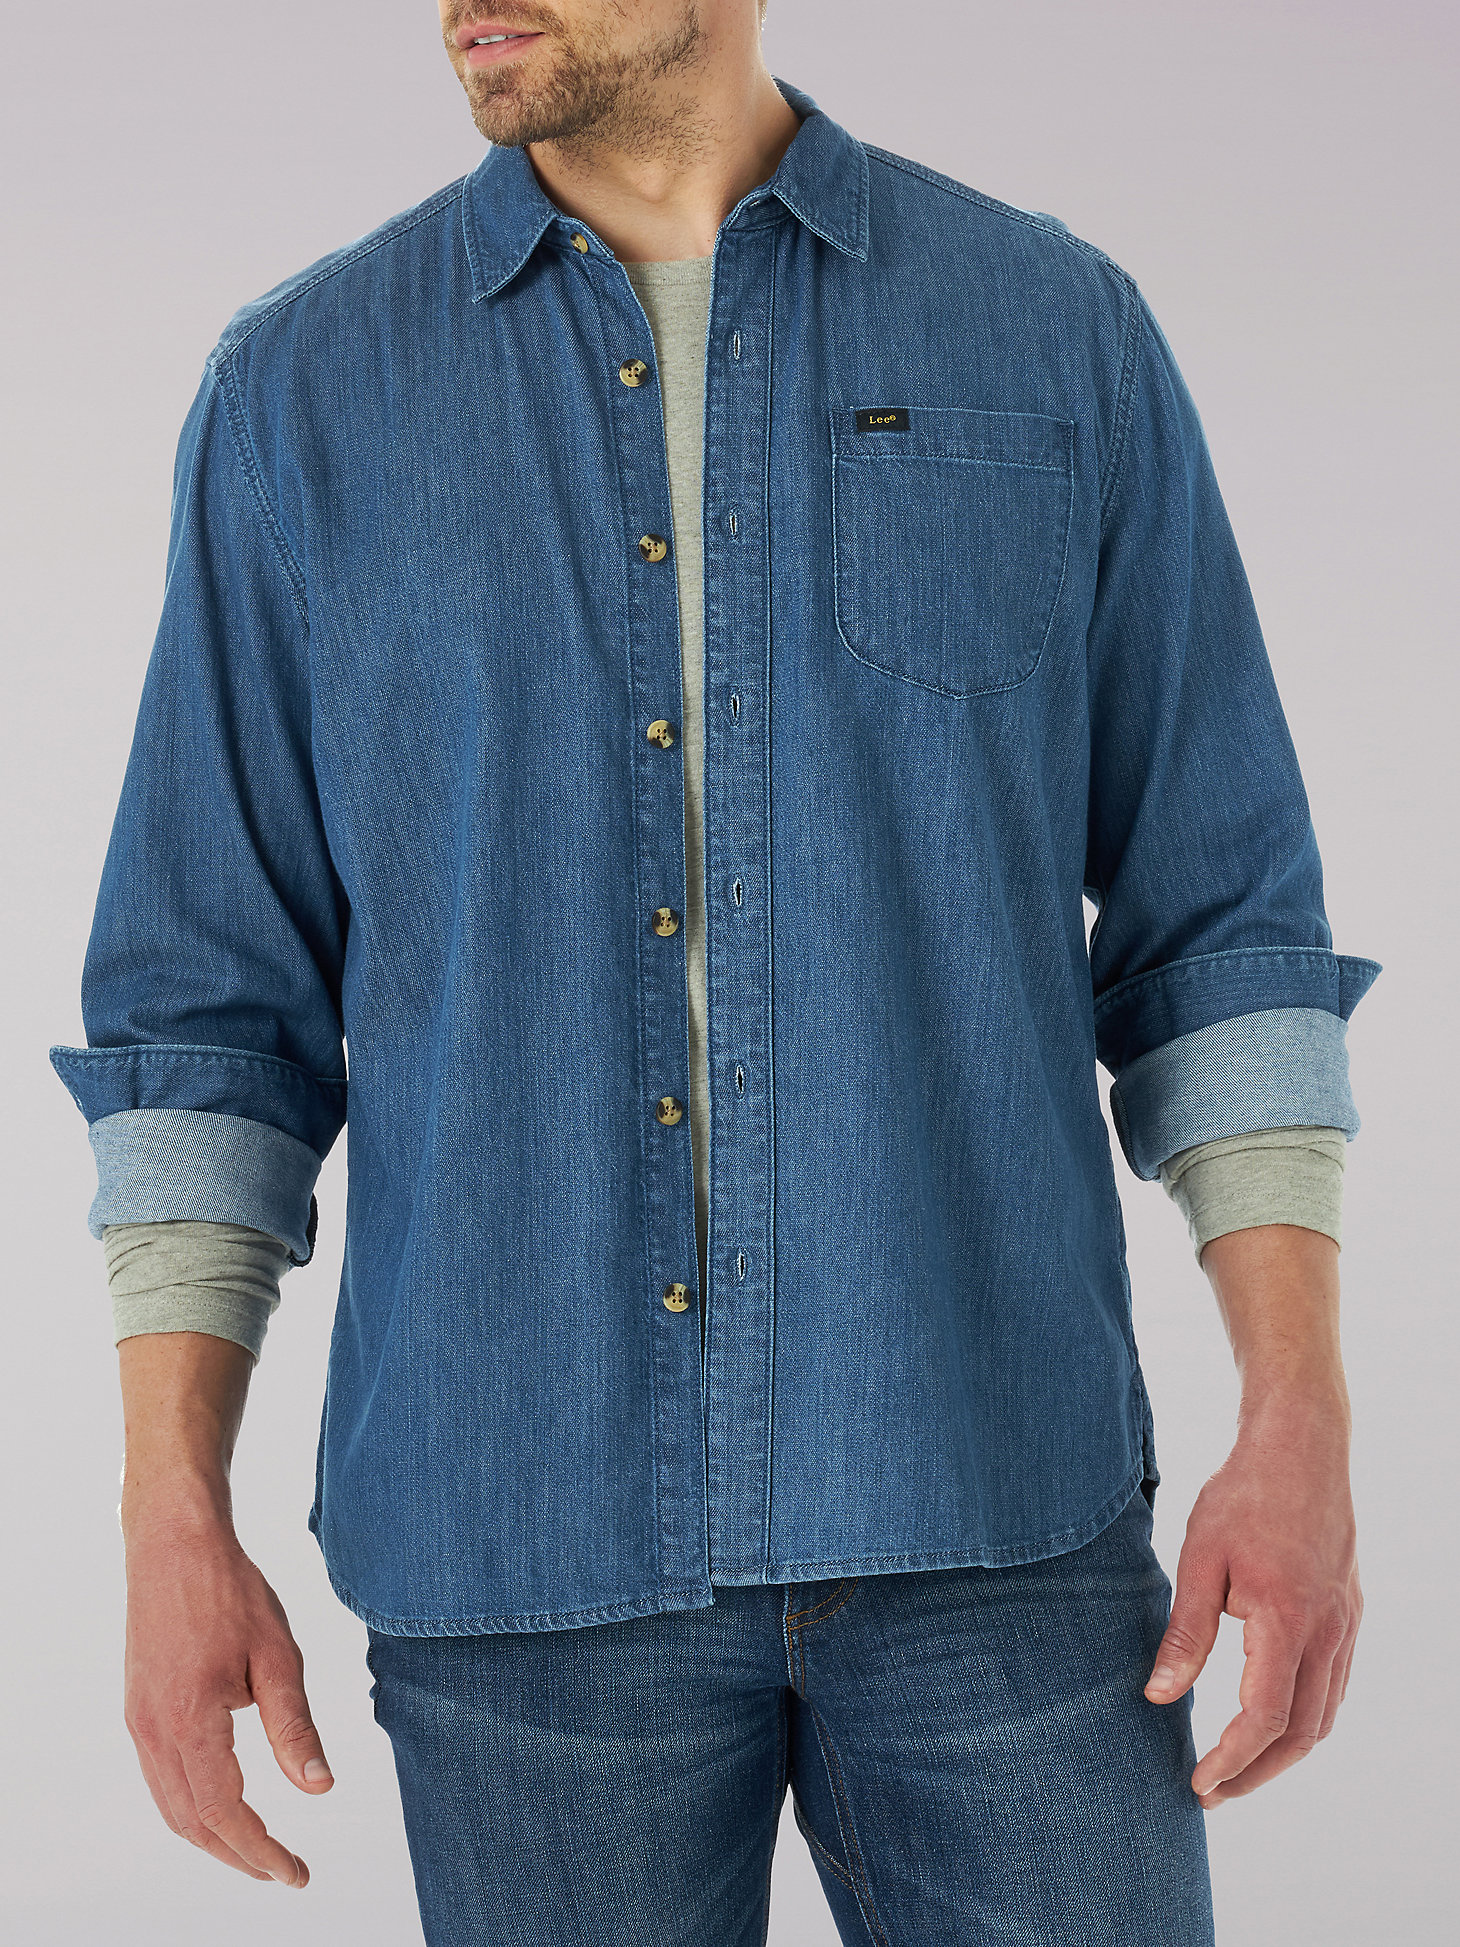 New Men's Classic Long Sleeve Button Up Casual Blue Jeans Shirt Denim Dress 